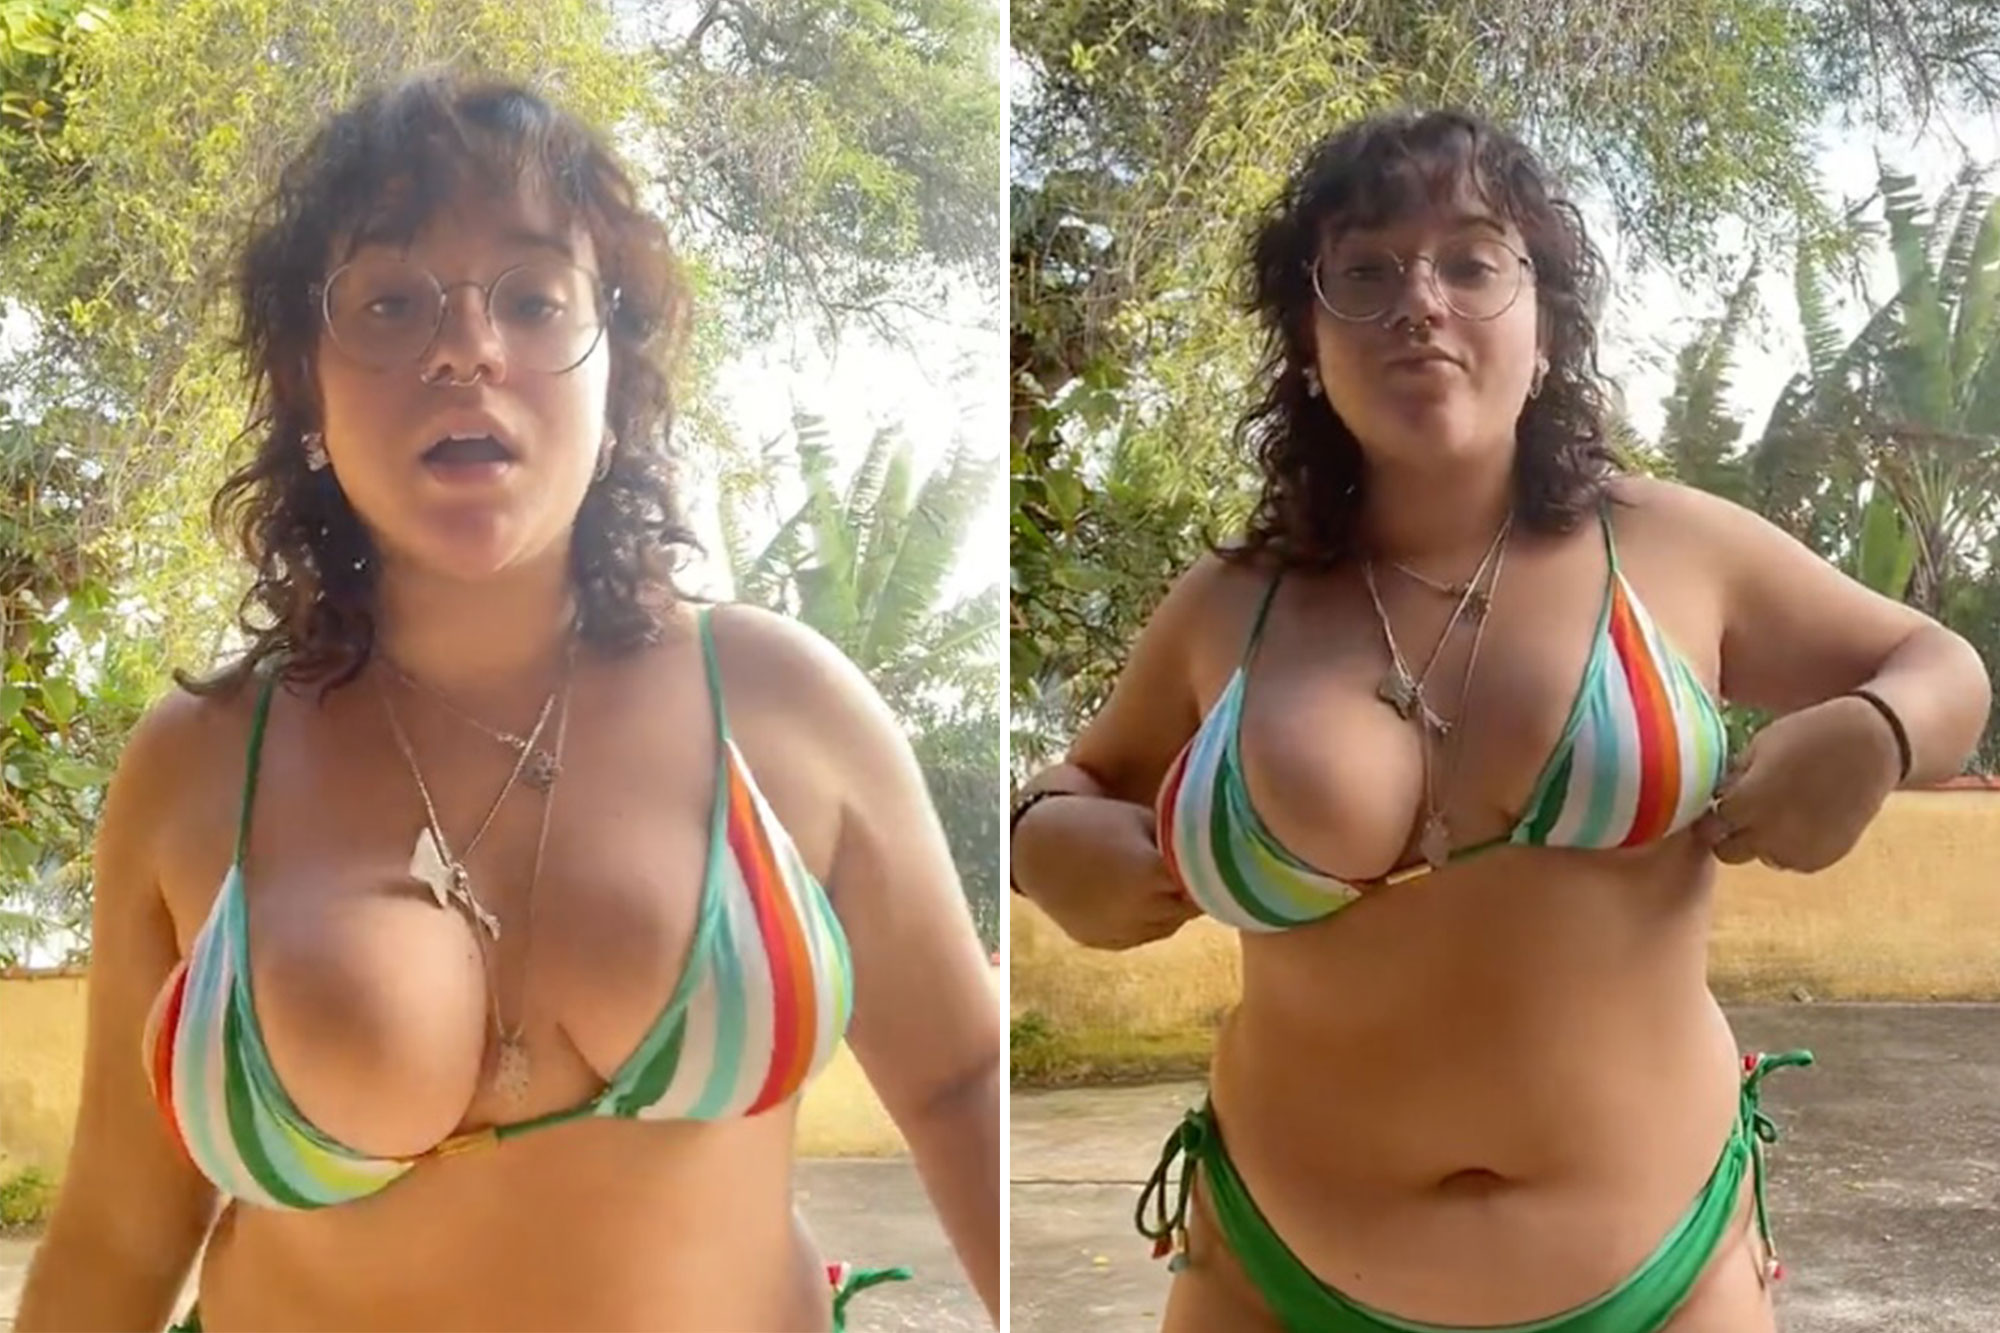 bobby cage share big boobs little bikini photos